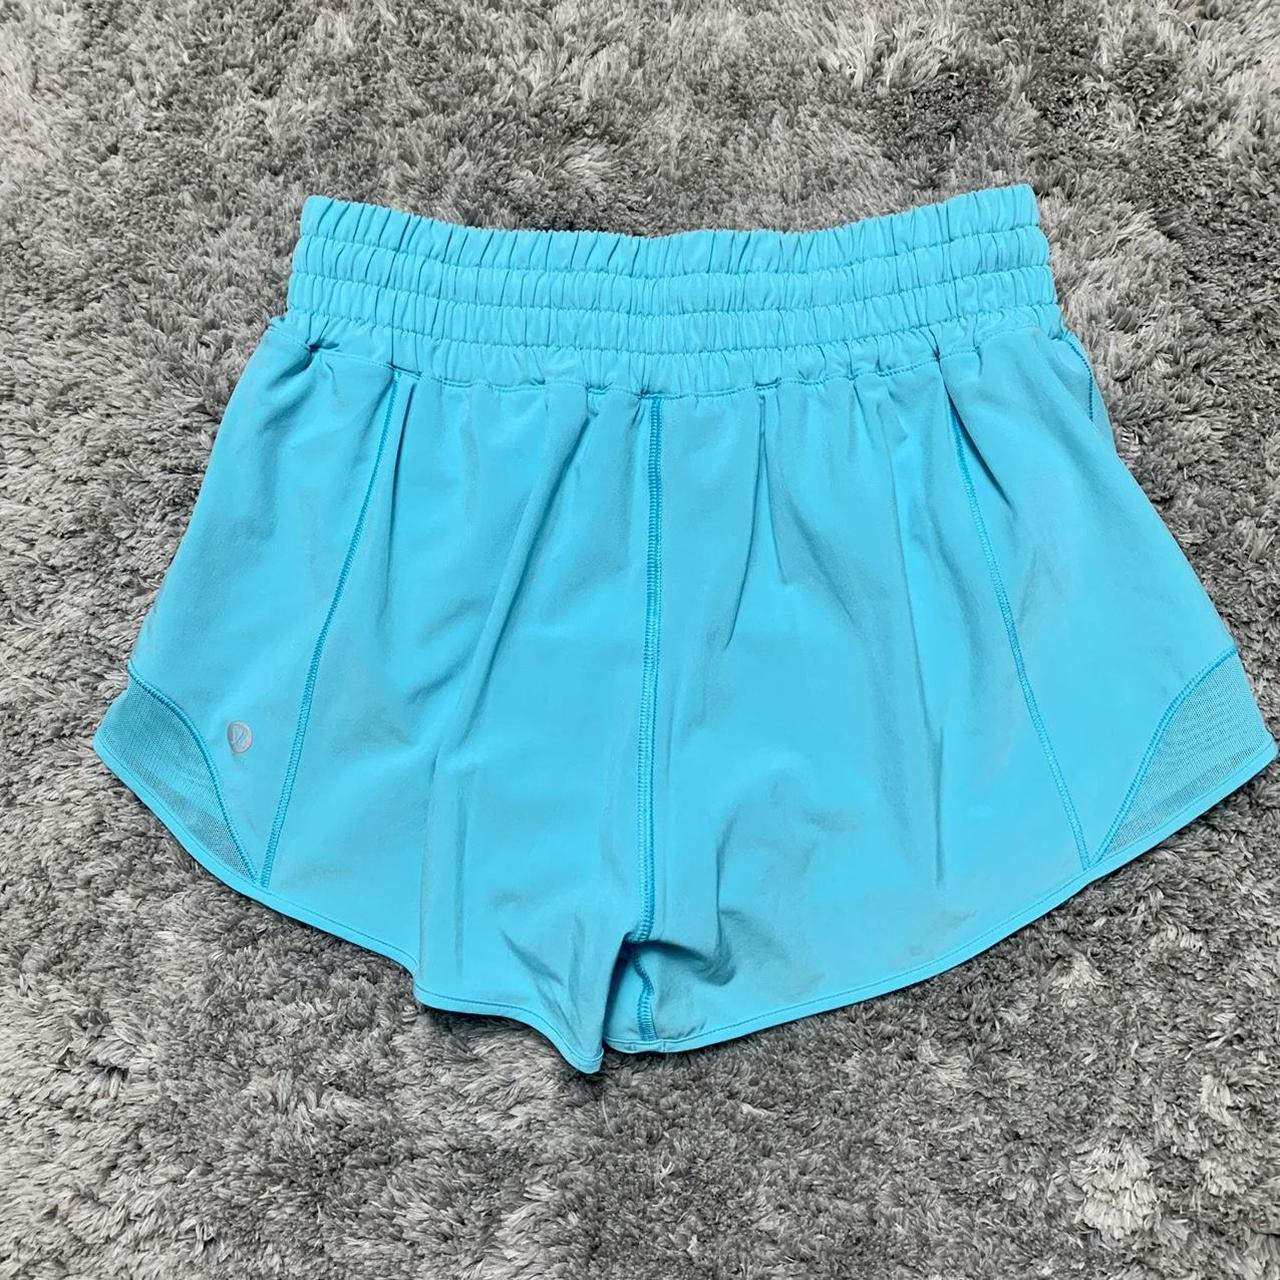 Lululemon hotty hot shorts 2 1/2 inch seam shorts. - Depop